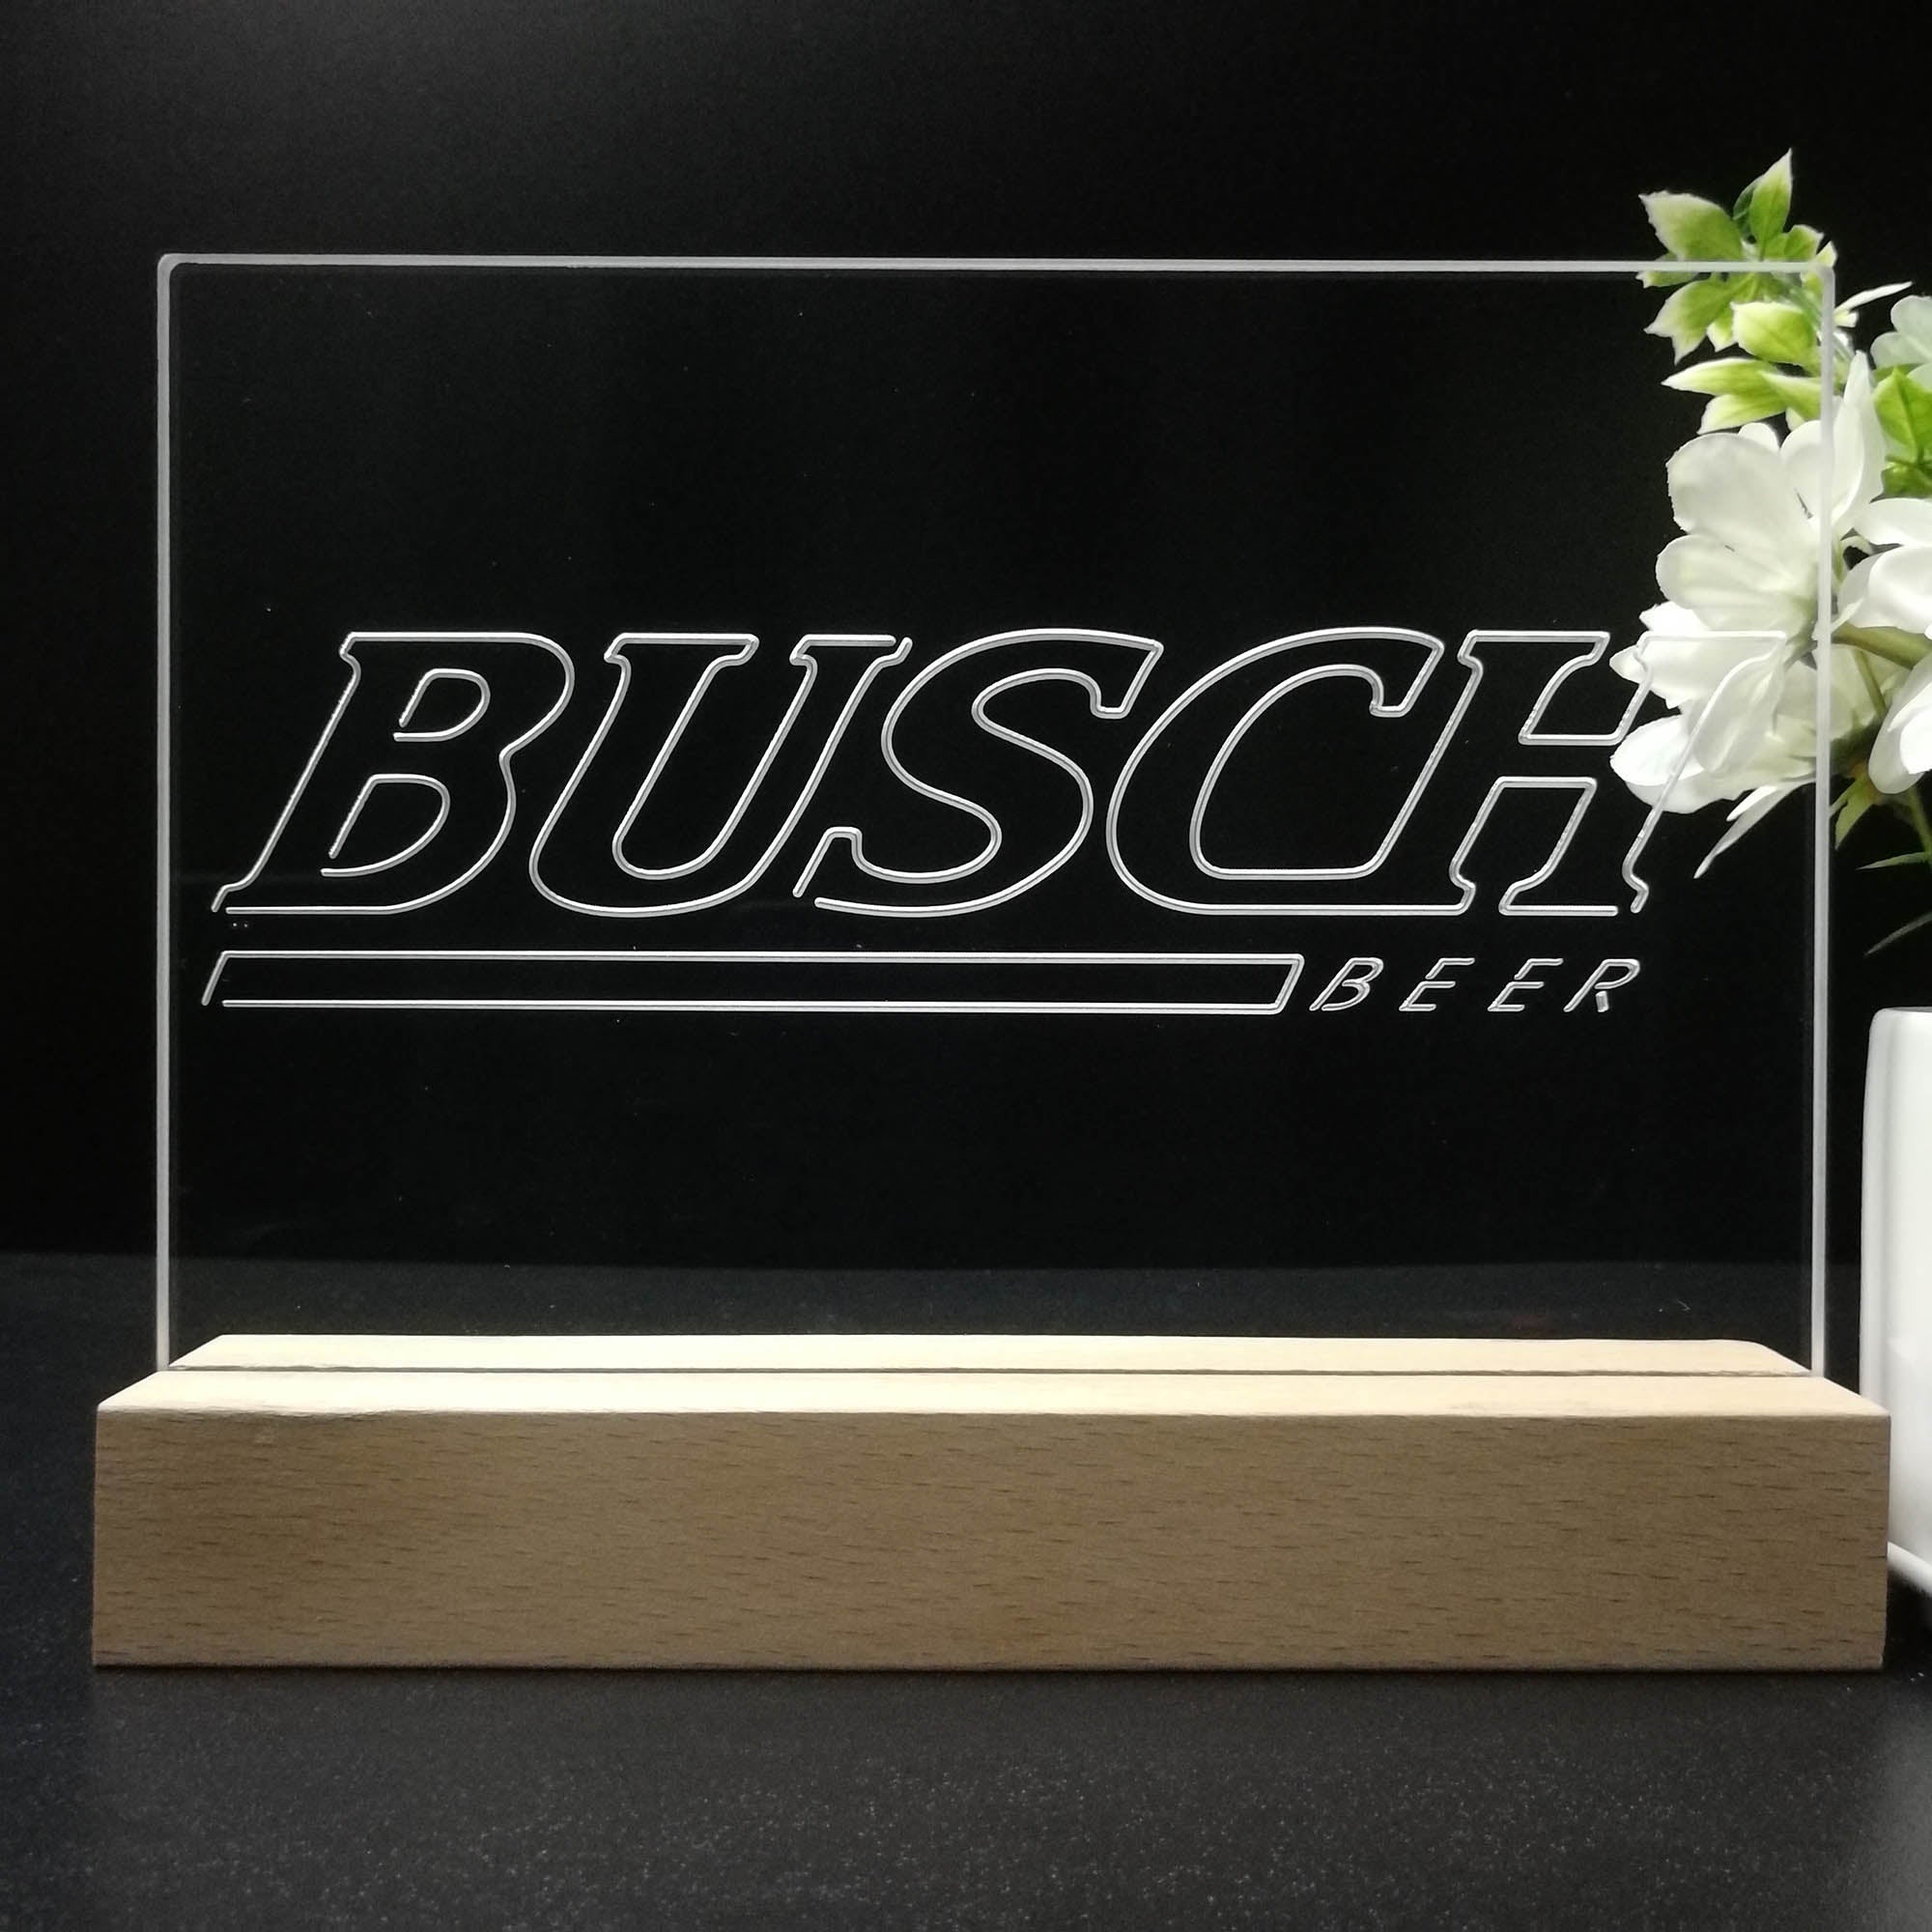 Buschs Logo Beer Neon Sign Pub Bar Decor Lamp